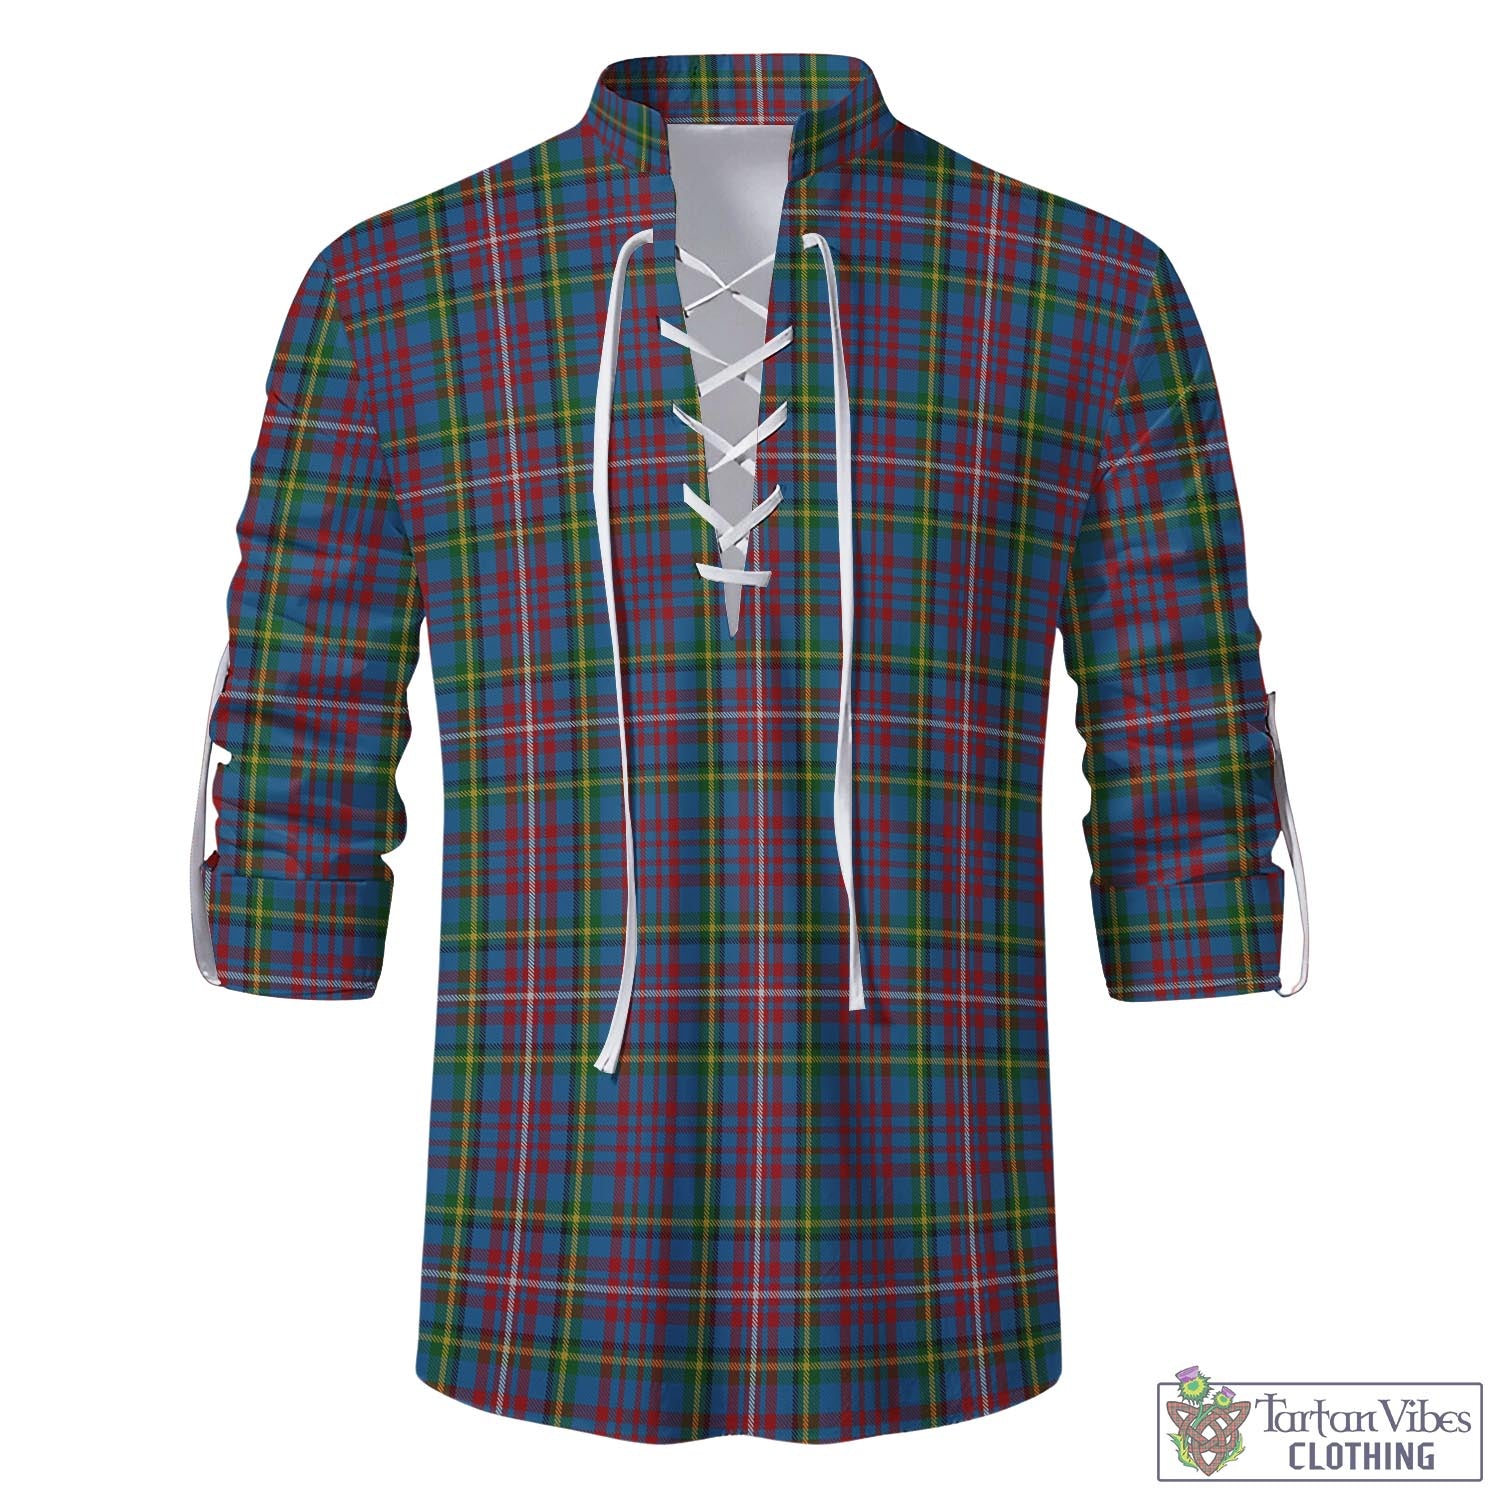 Tartan Vibes Clothing Hyndman Tartan Men's Scottish Traditional Jacobite Ghillie Kilt Shirt